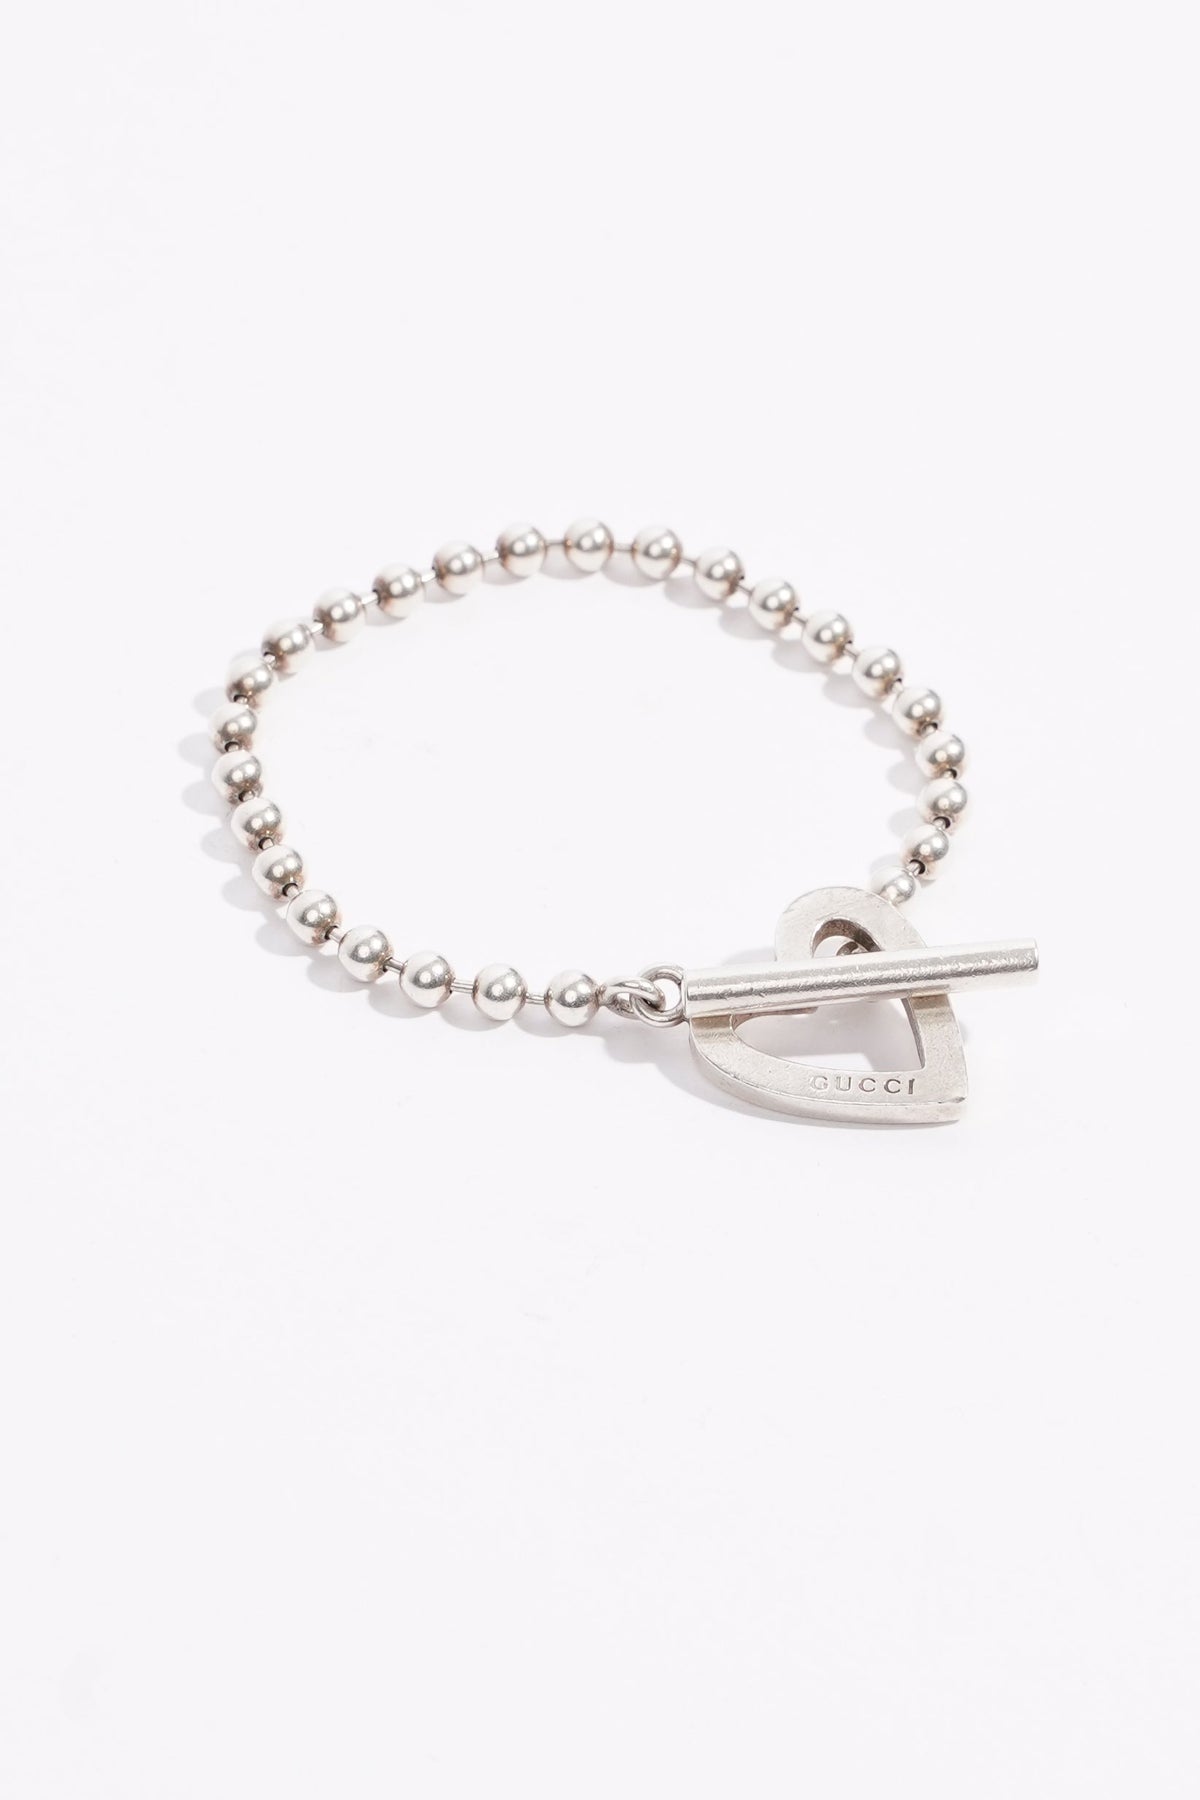 GUCCI Silver Chain Bracelet for Men | MR PORTER